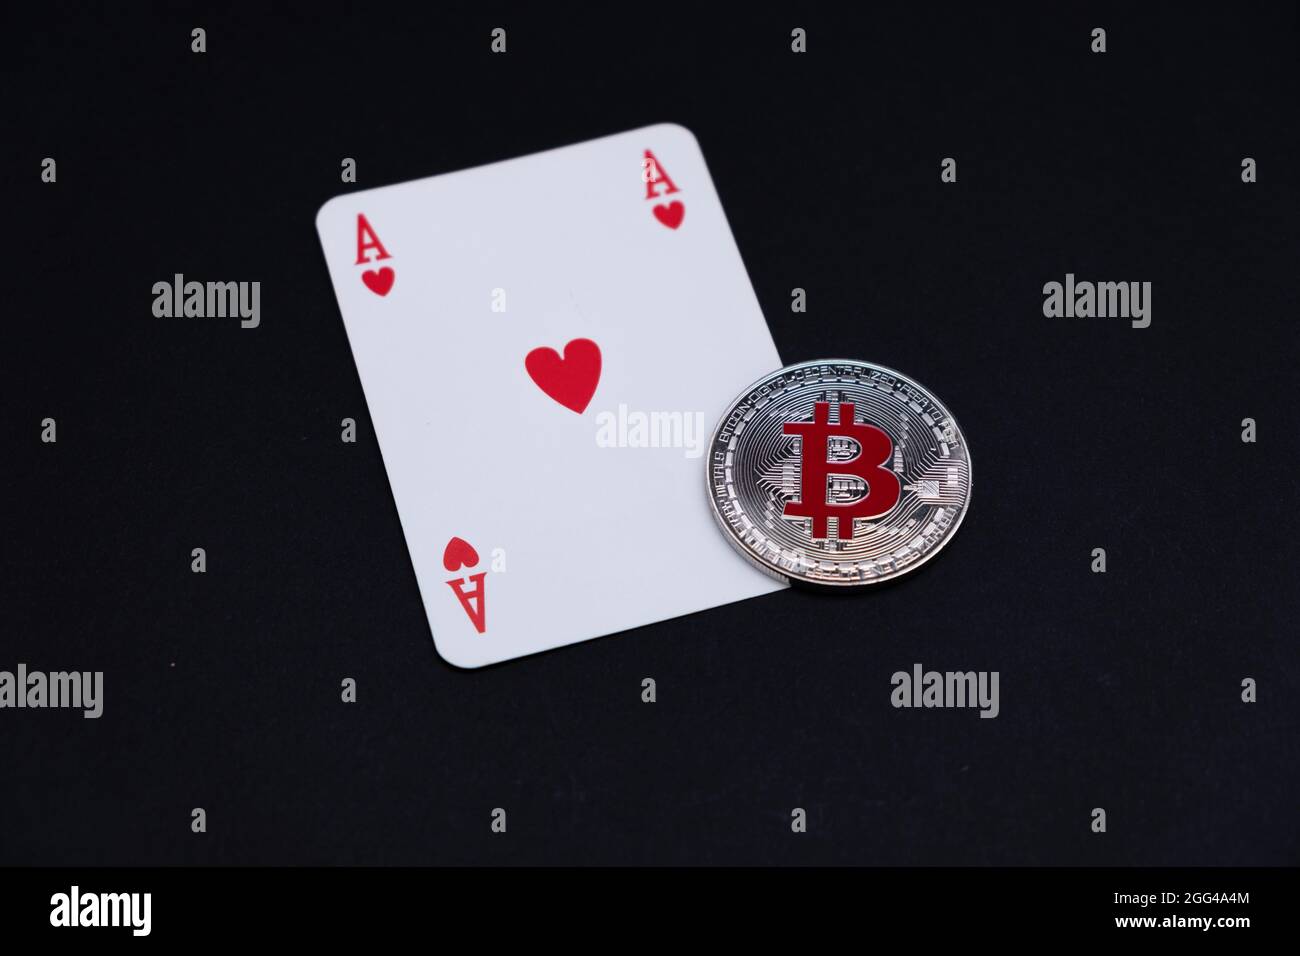 Ace card crypto axs binance price